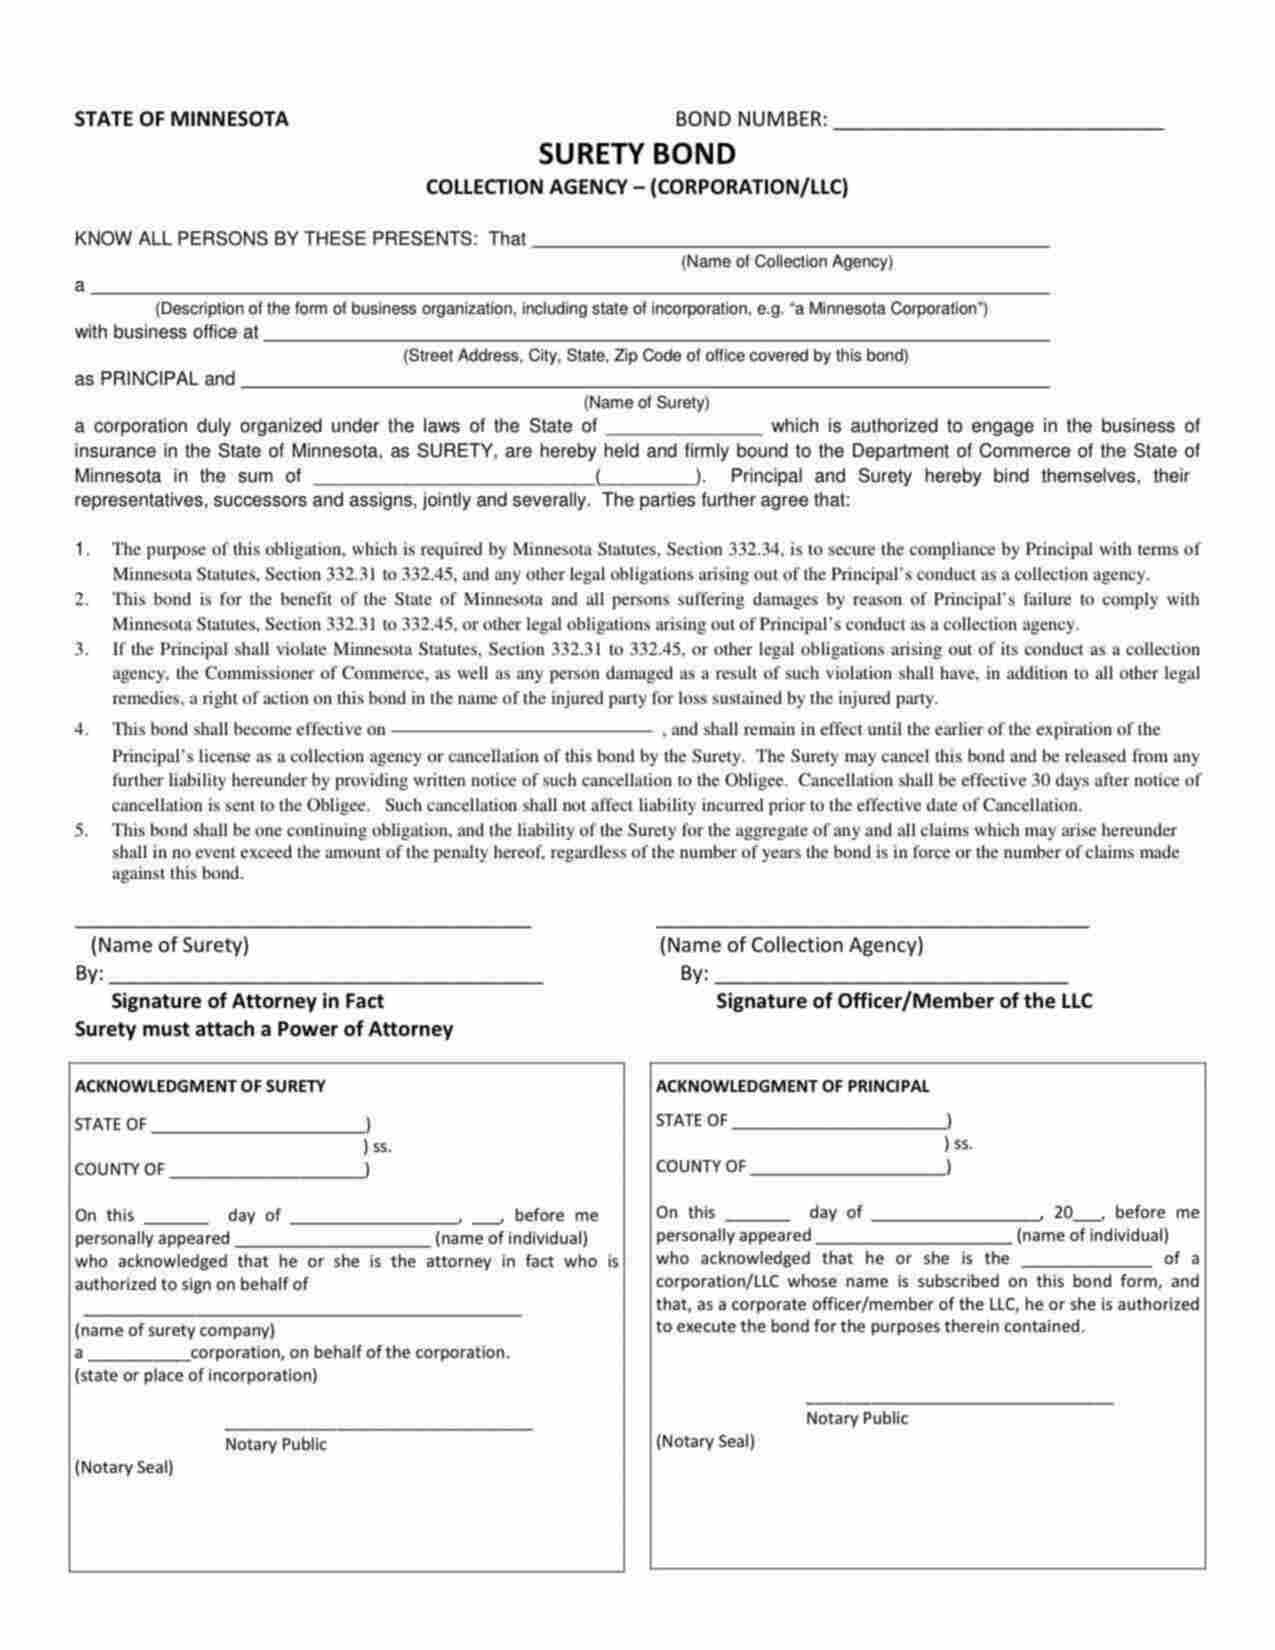 Minnesota Collection Agency (Corporation/LLC) Bond Form